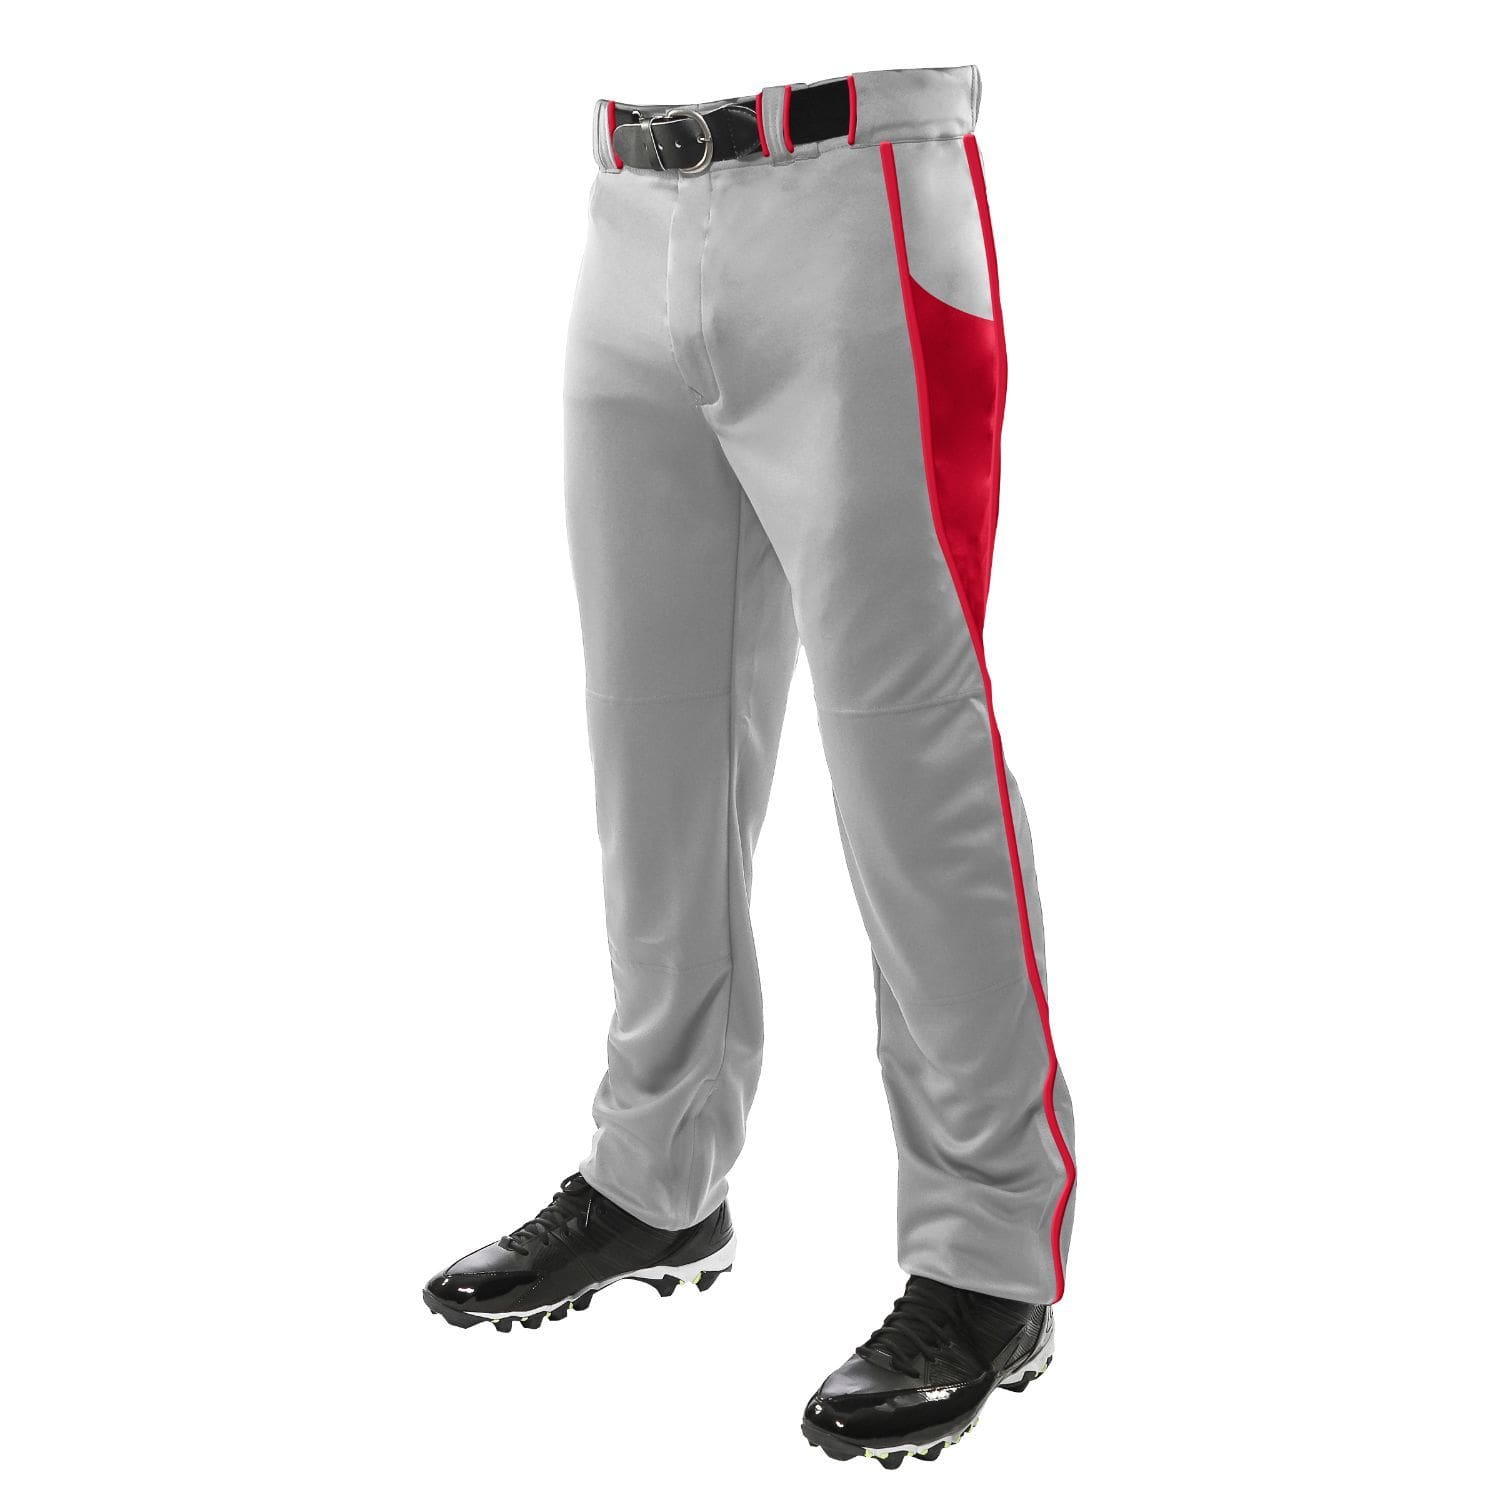 Champro Sports : Baseball Champro Adult Triple Crown Baseball Pant Grey Scarlet Small